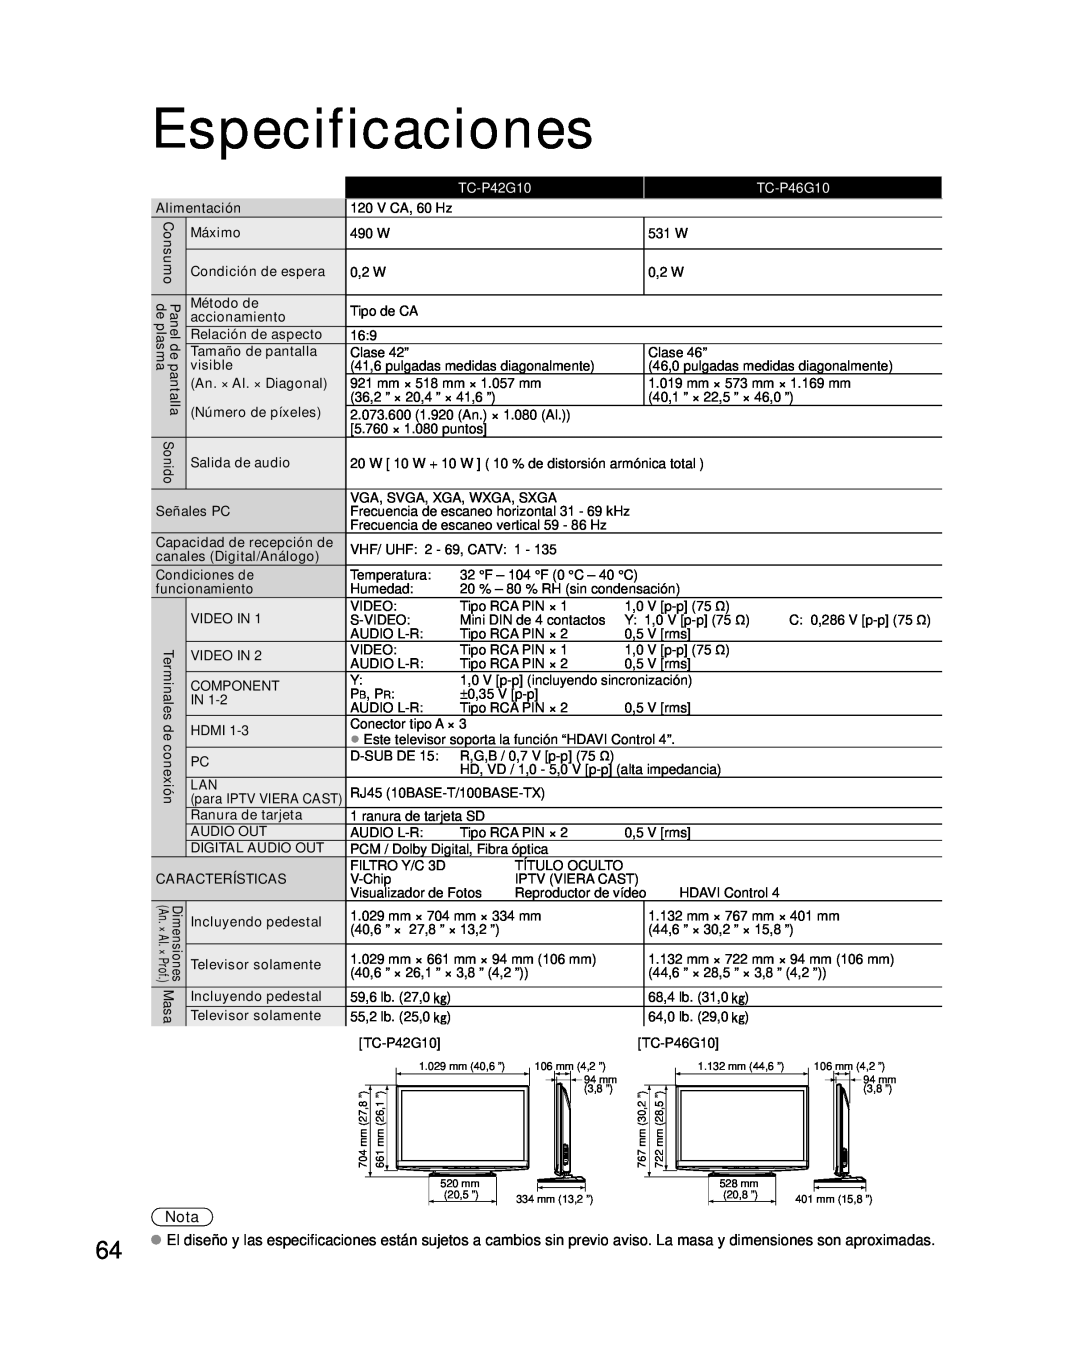 Panasonic TC-P50G10, TC-P46G10, TC-P54G10 Especificaciones, Condición de espera, Relación de aspecto, An. × Al. × Diagonal 